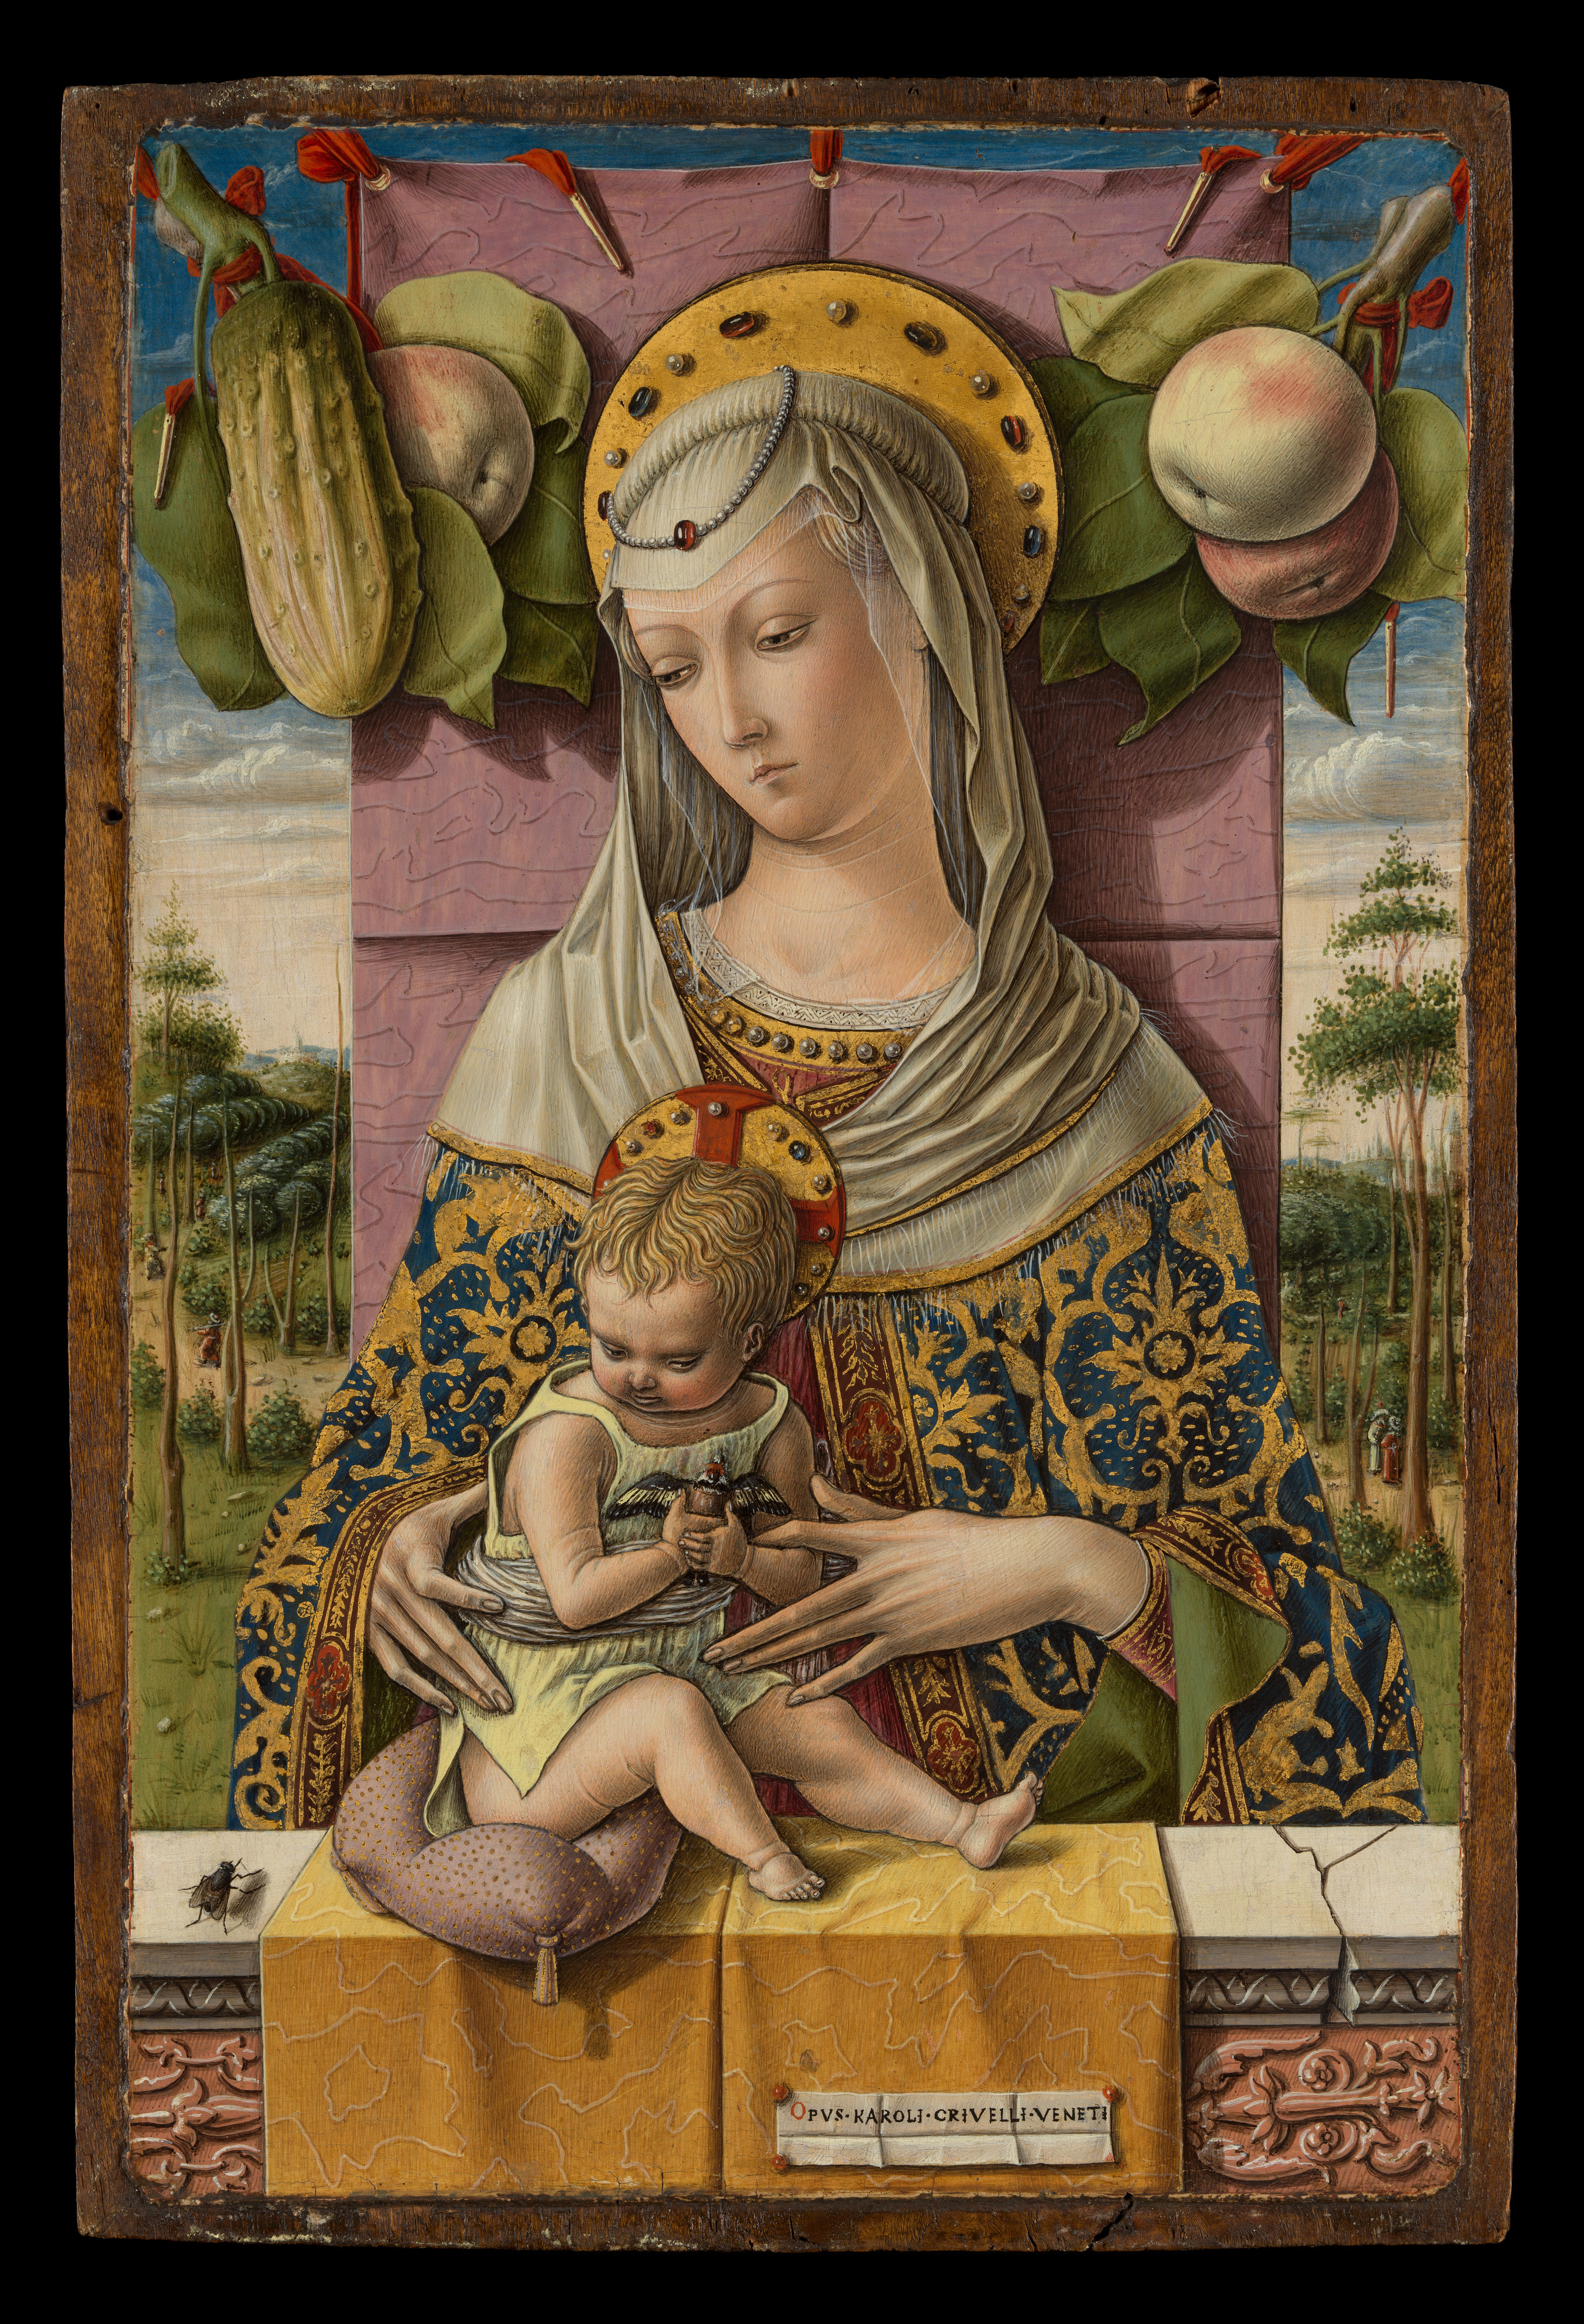 Madonna und Kind by Carlo Crivelli - ca. 1480 - 37.8 x 25.4 cm Metropolitan Museum of Art